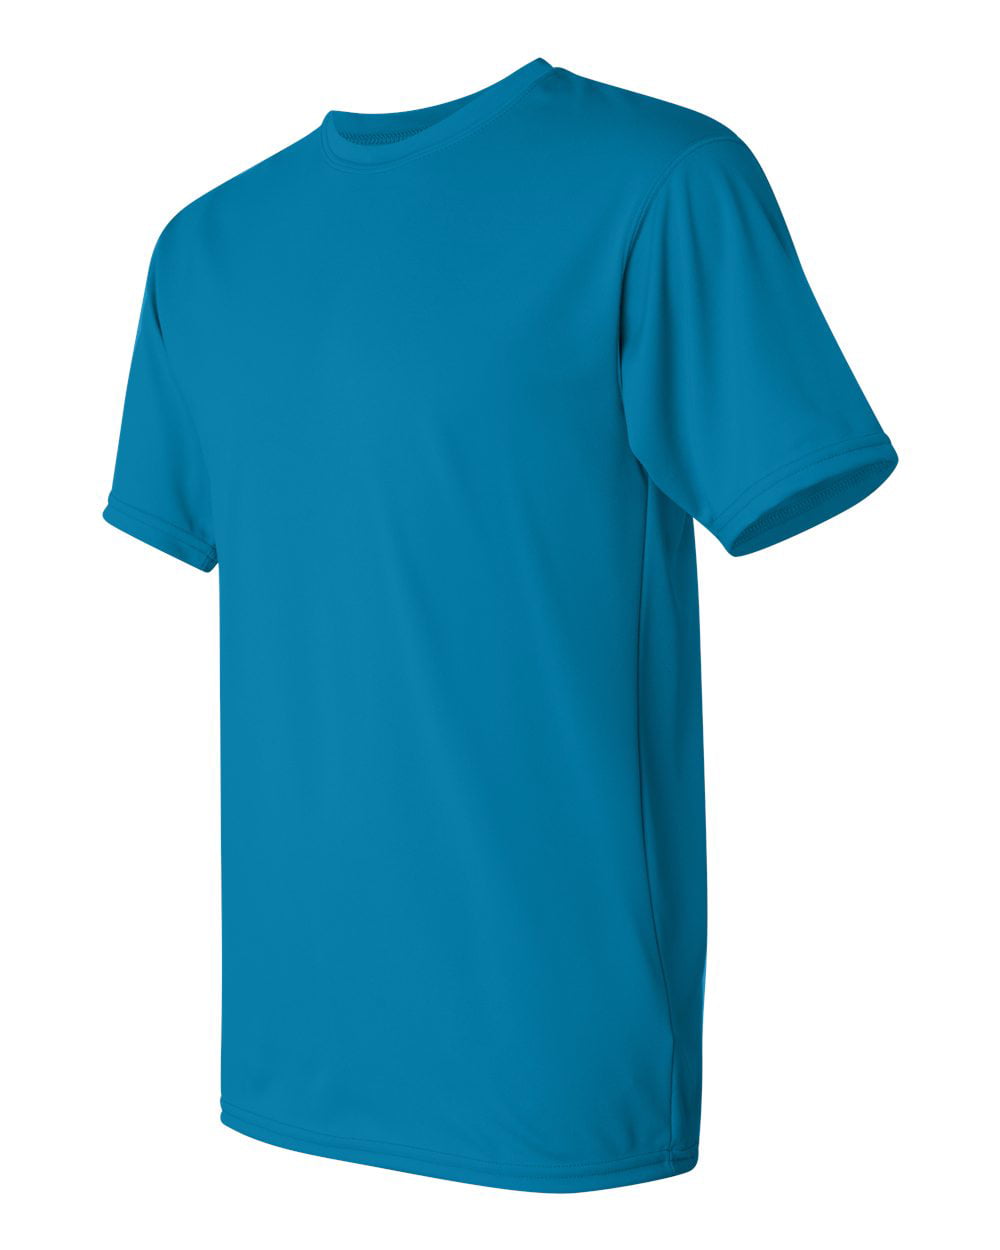 Nexgen 790 Size: Teal 2XL - - Wicking - - T-Shirt Sportswear Augusta